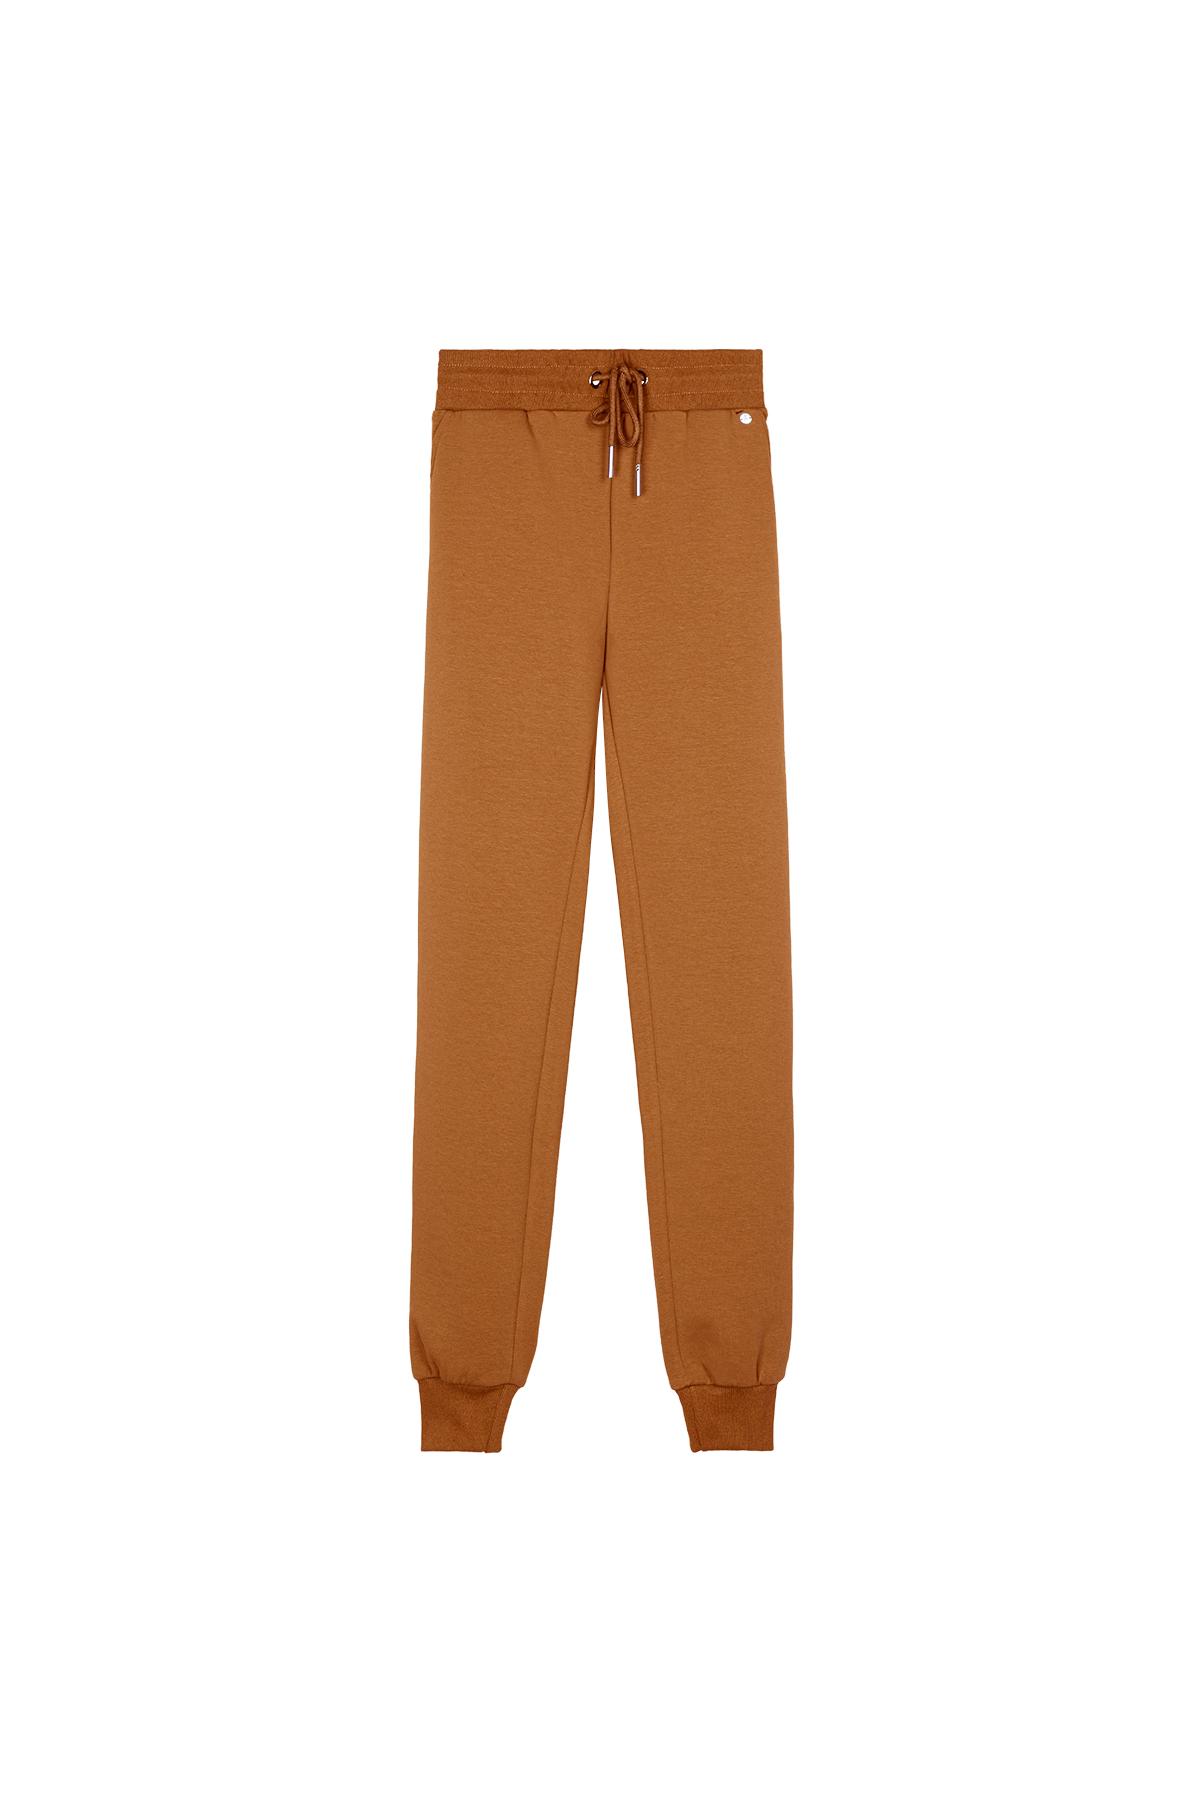 Comy Hosen Loungewear Orange XL h5 